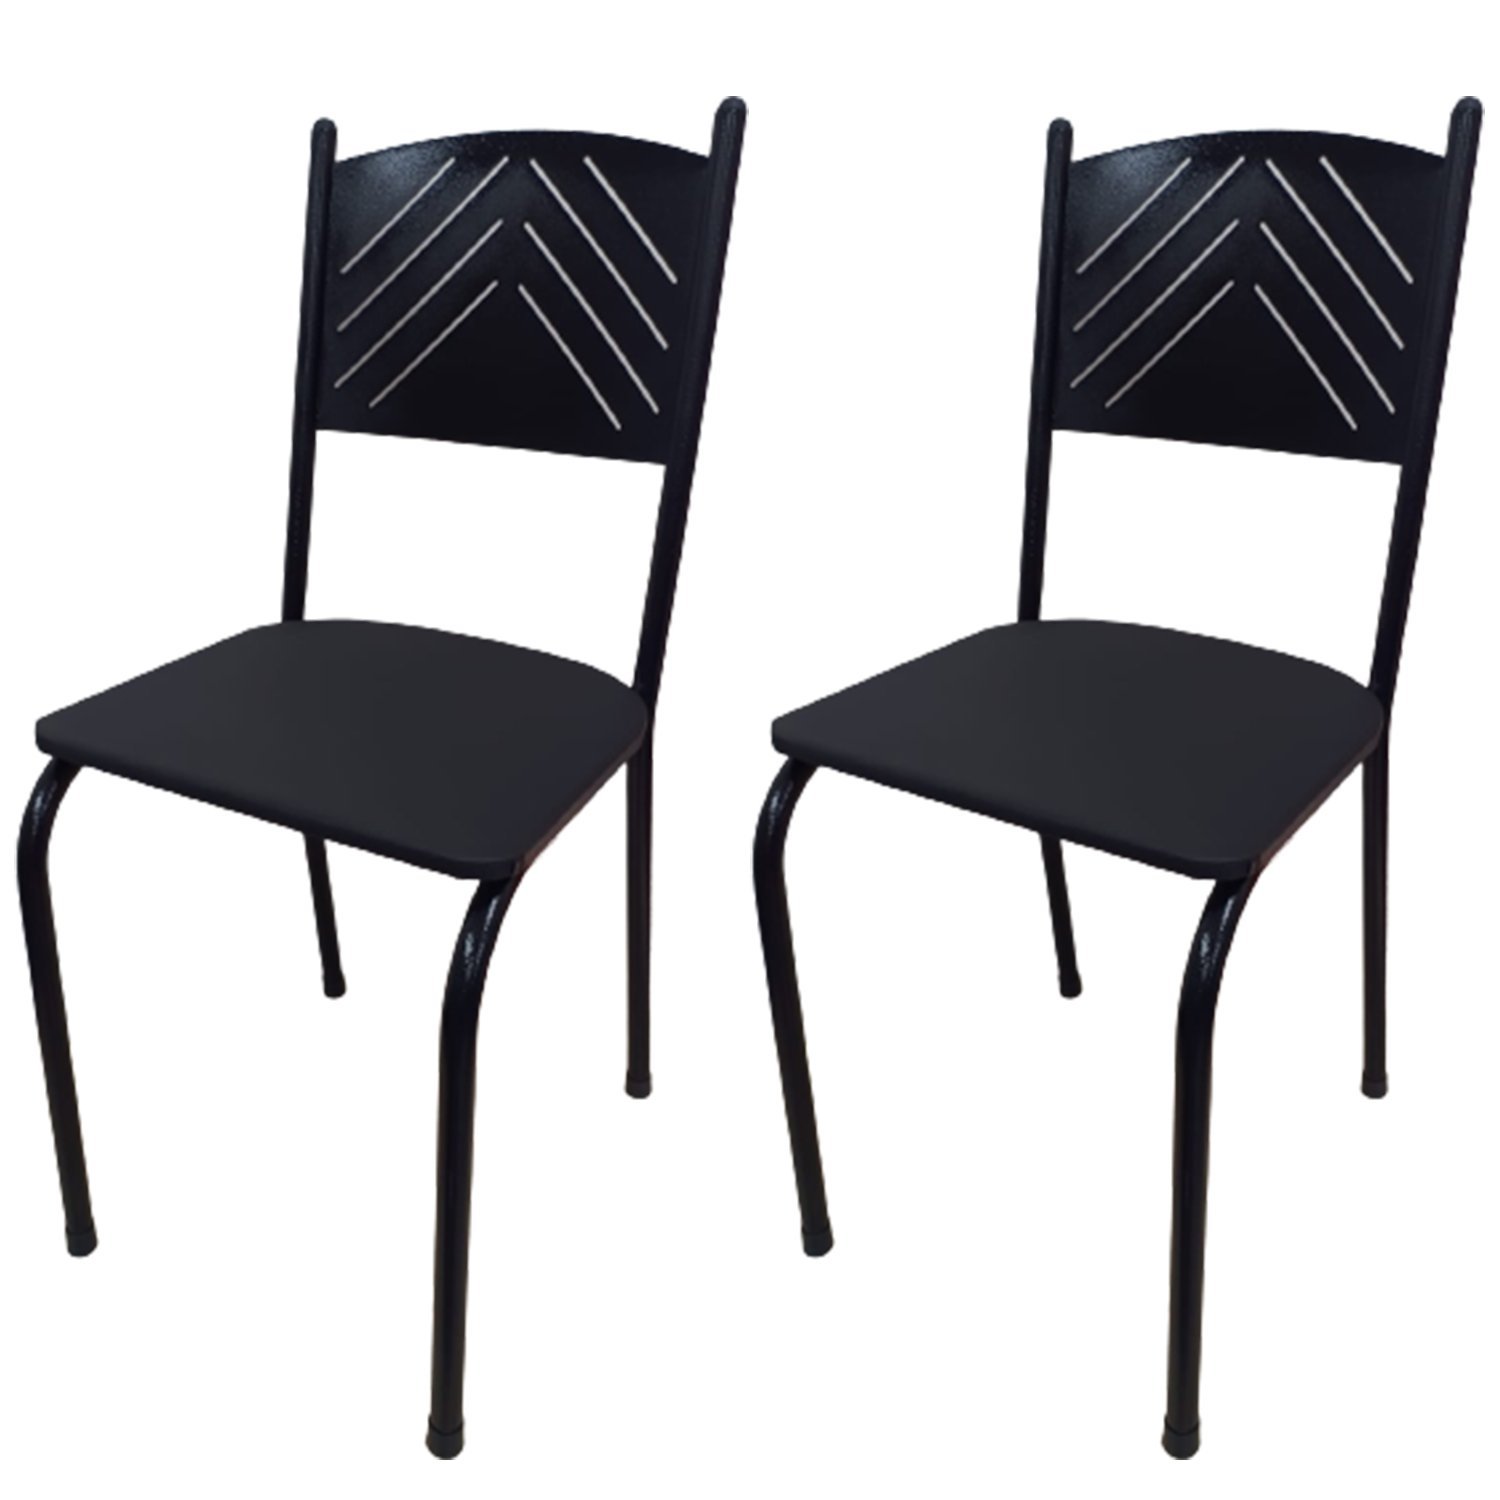 Kit 2 Cadeiras Preta para Cozinha Jantar Metal Tubular Almofadada Medcombo - 1